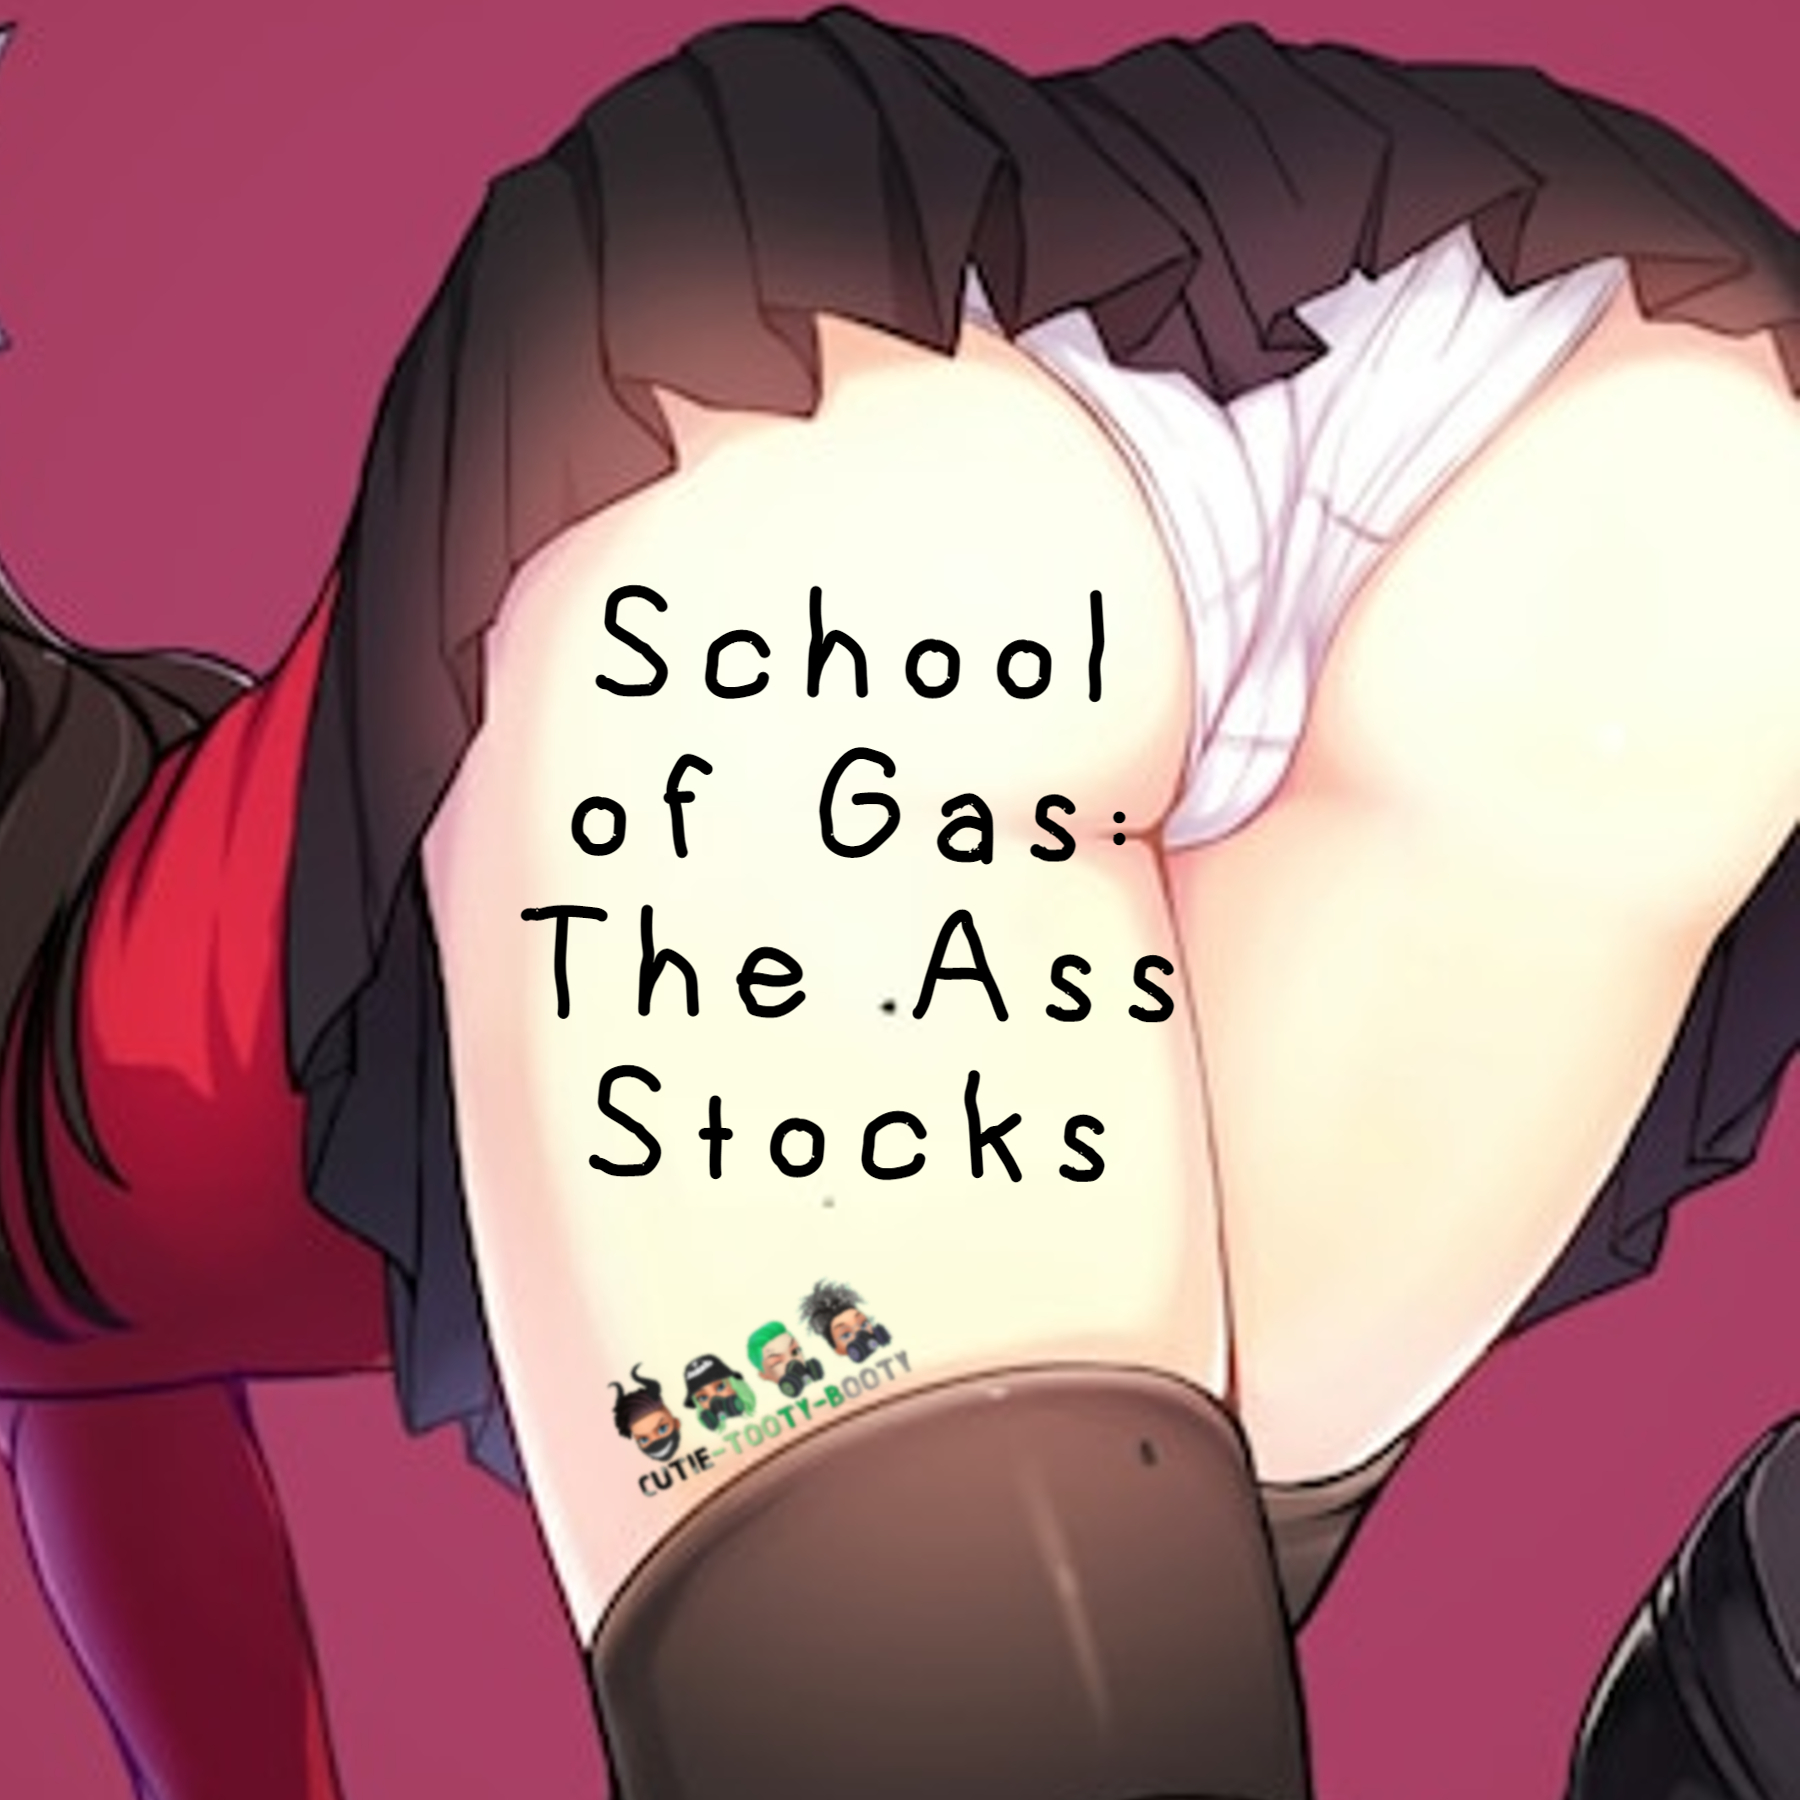 Xxx School Gas - Favorite hentai: School of Gas: The Ass Stocks - ThisVid.com